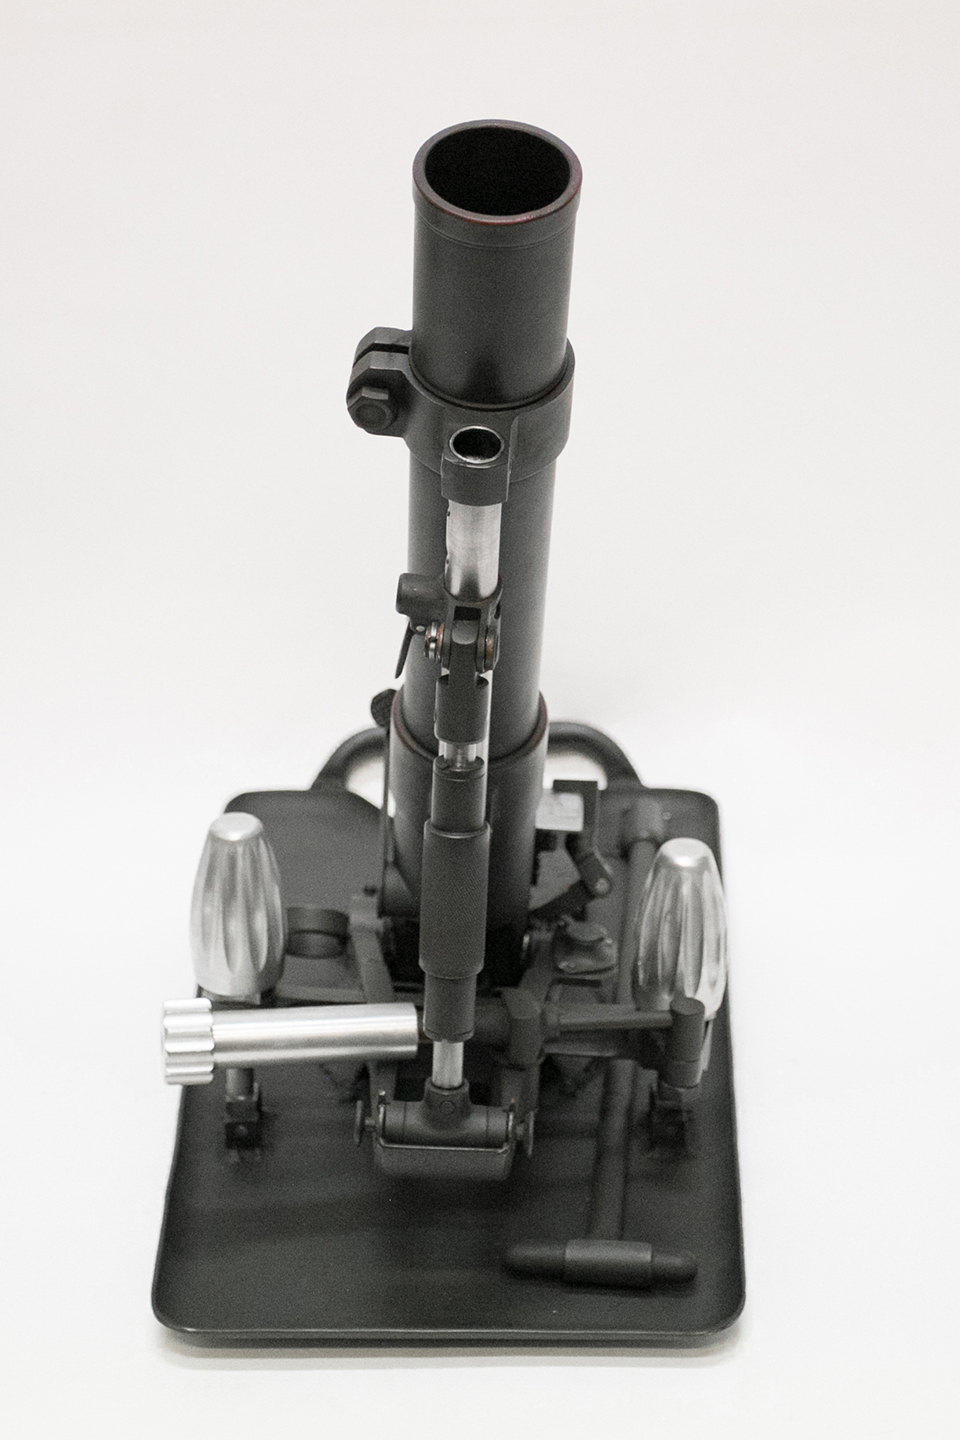 granatnik-GrW-36-3.jpg